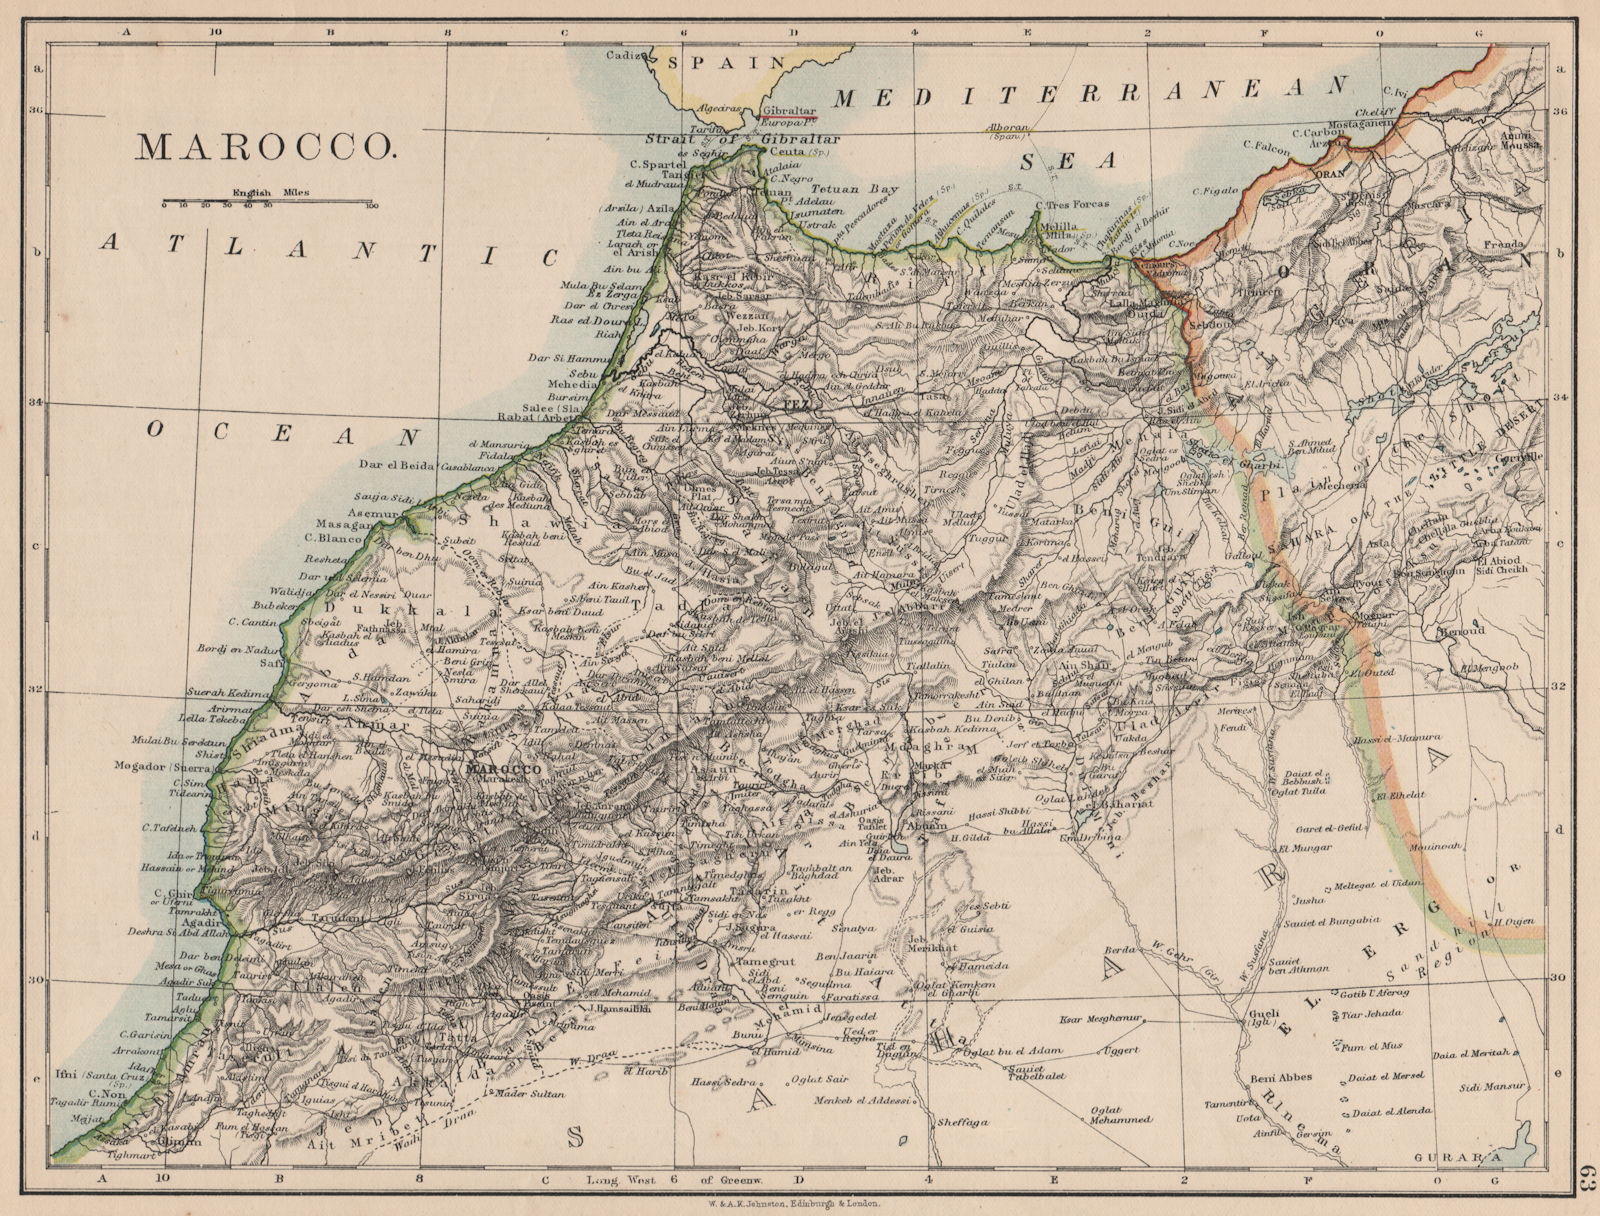 MOROCCO. Showing Atlas mountains rivers towns. Marrakech. JOHNSTON 1895 map